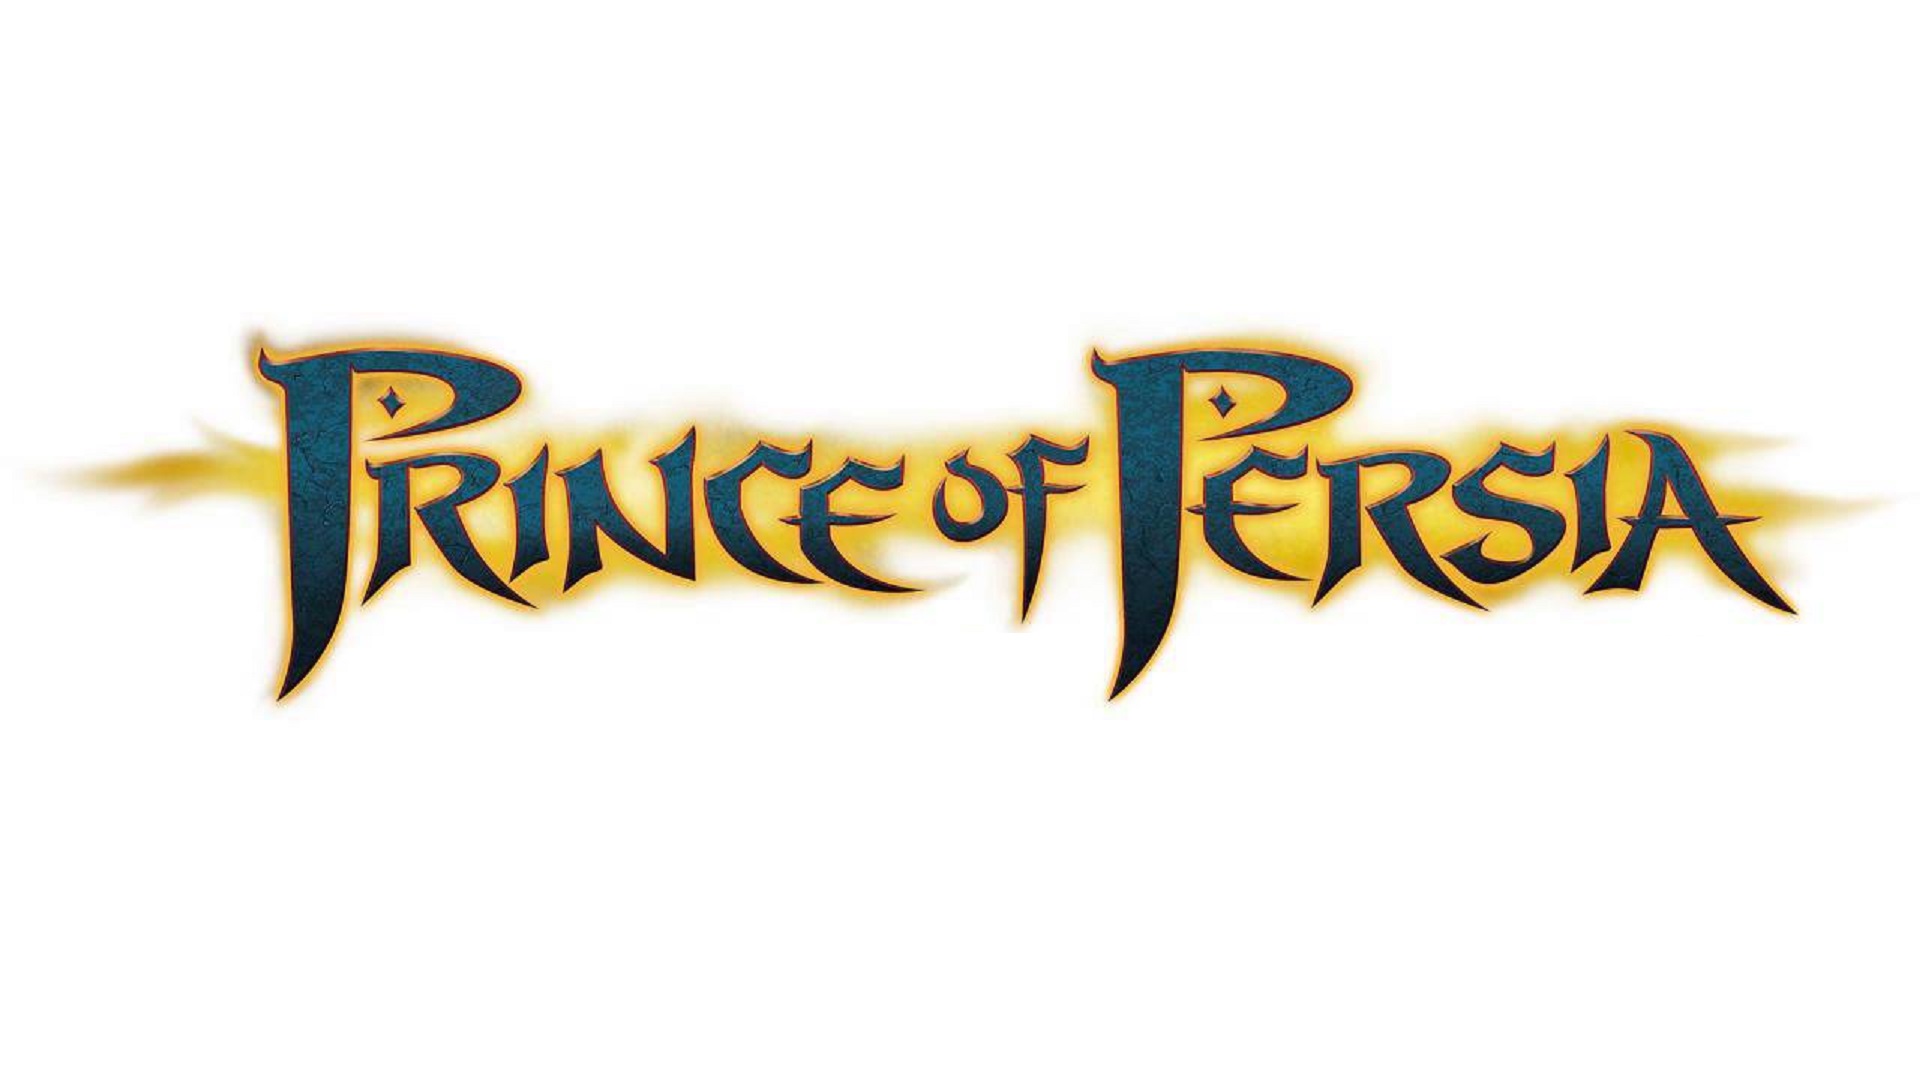 Princeps Persarum Logo